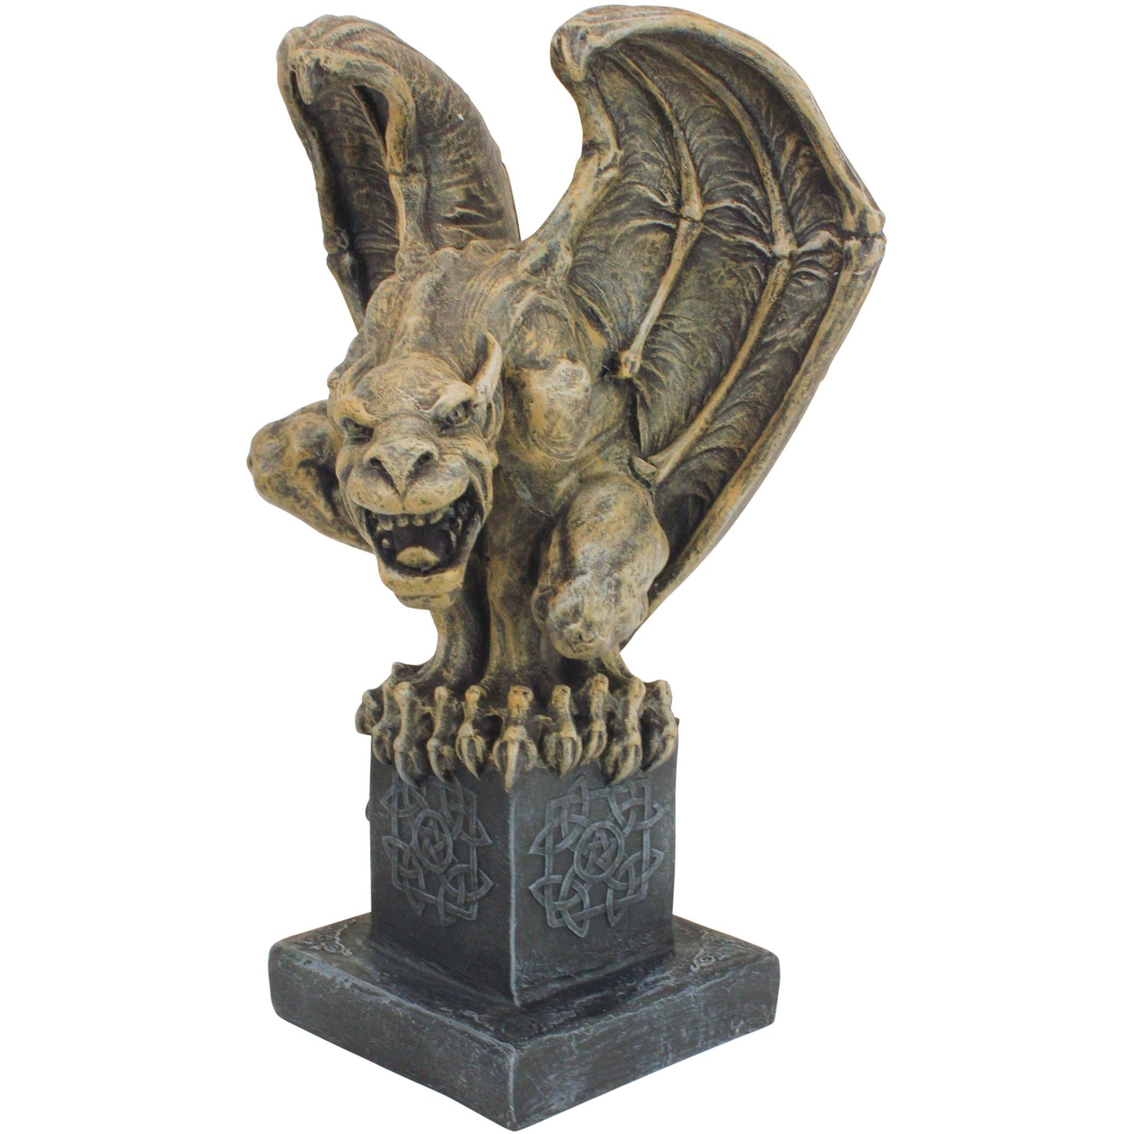 Design Toscano Abbadon Gargoyle Statue - Image 3 of 4